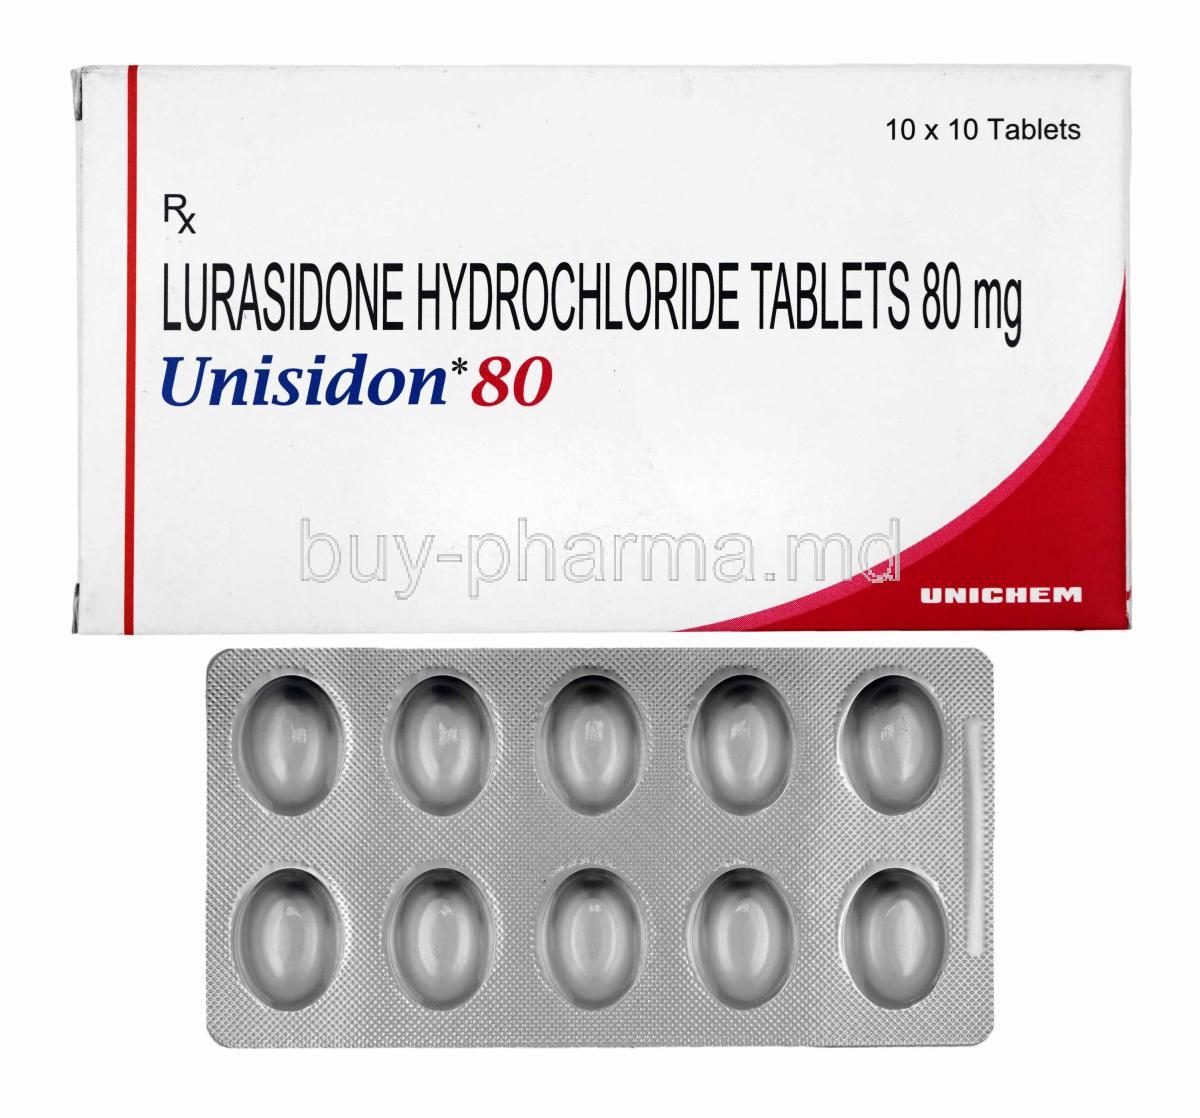 Unisidon, Lurasidone 80mg box and tablets